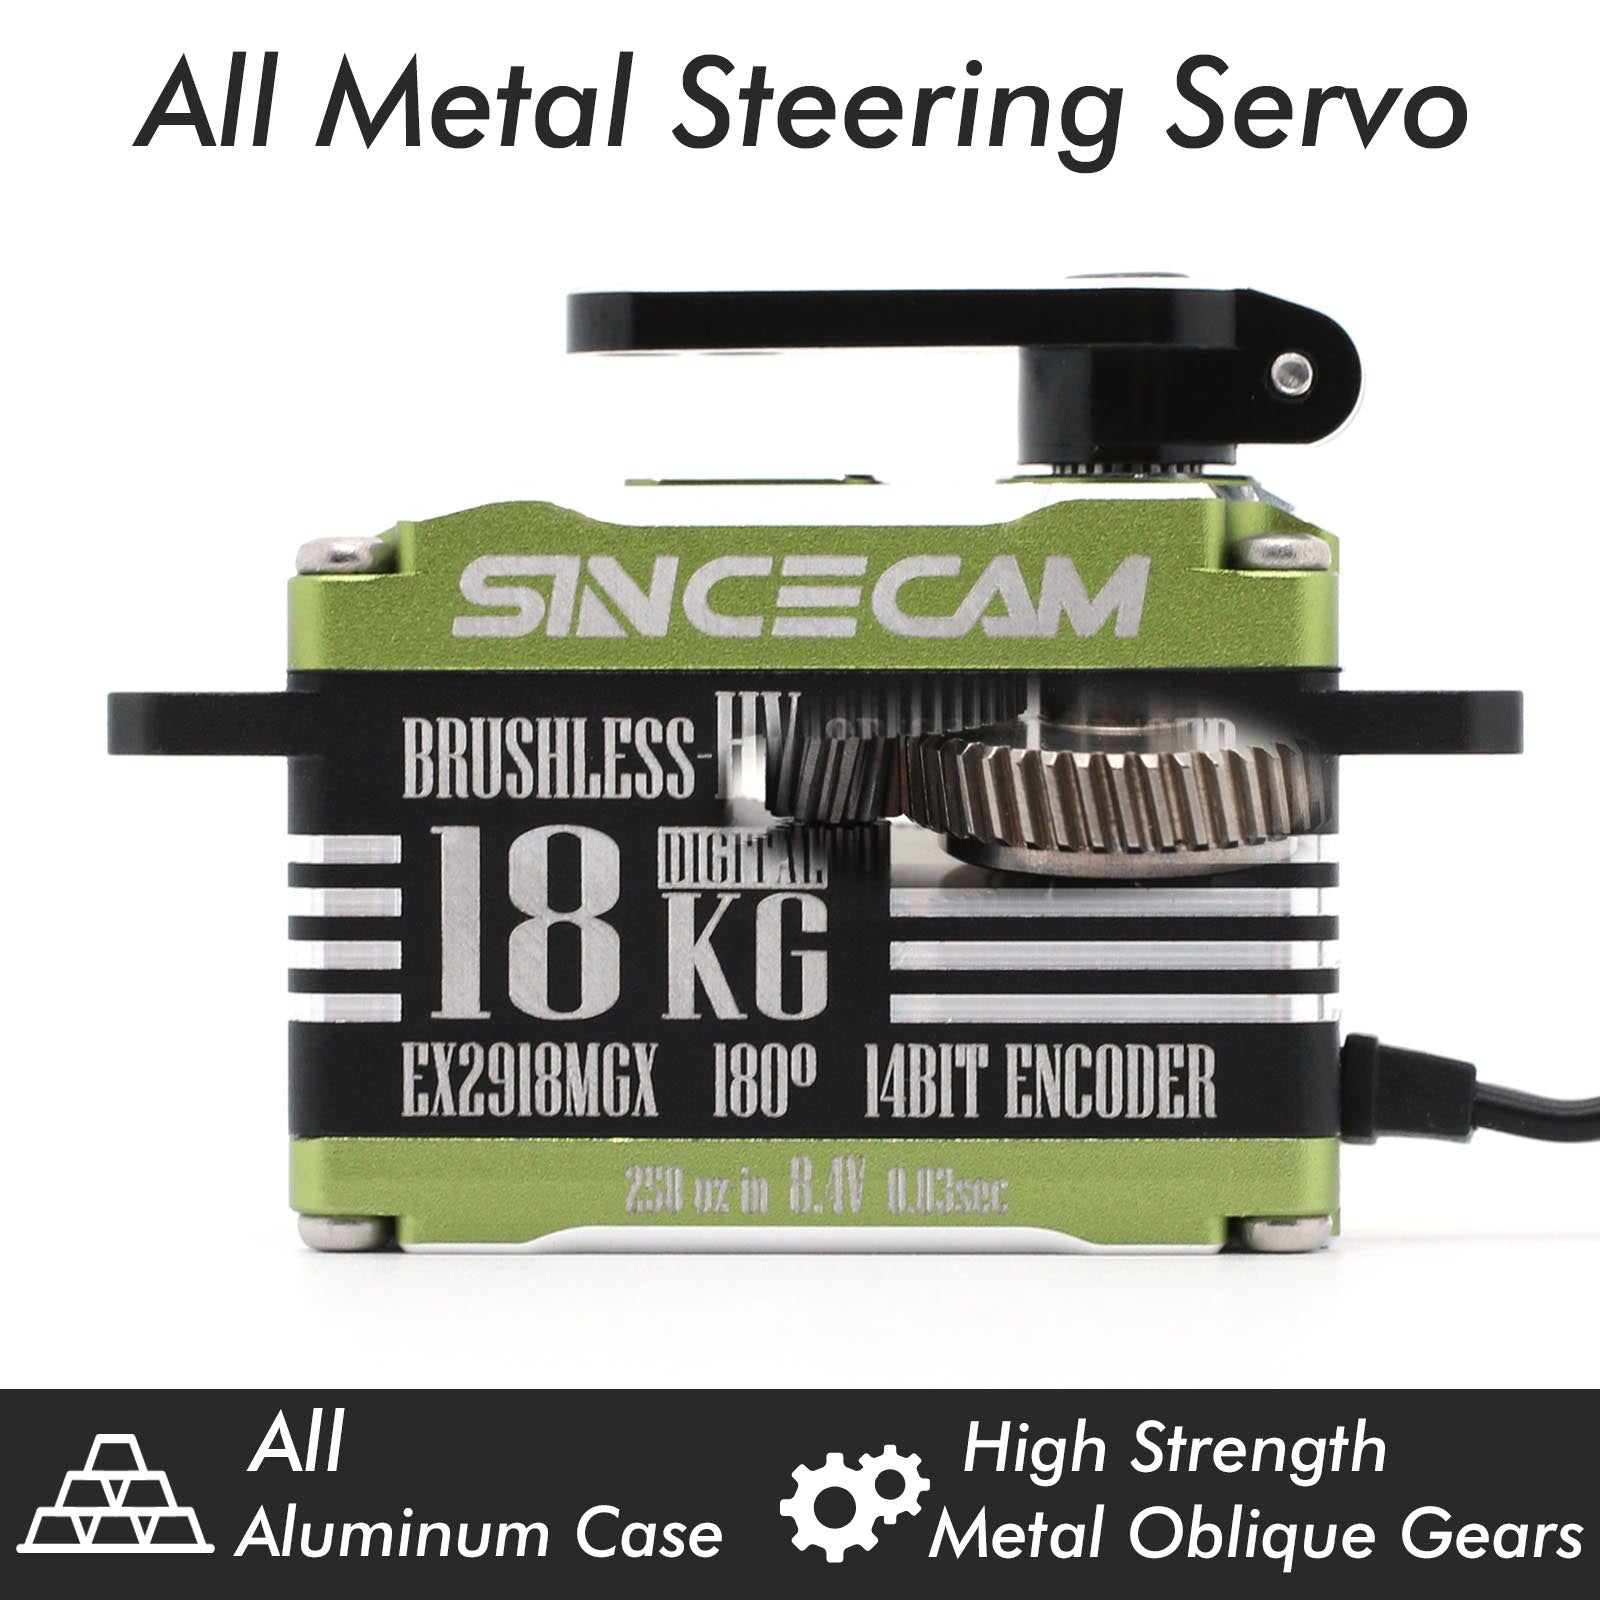 Sincecam 18kg Low Profile High Speed 0.03Sec Brushless Servos (Green)